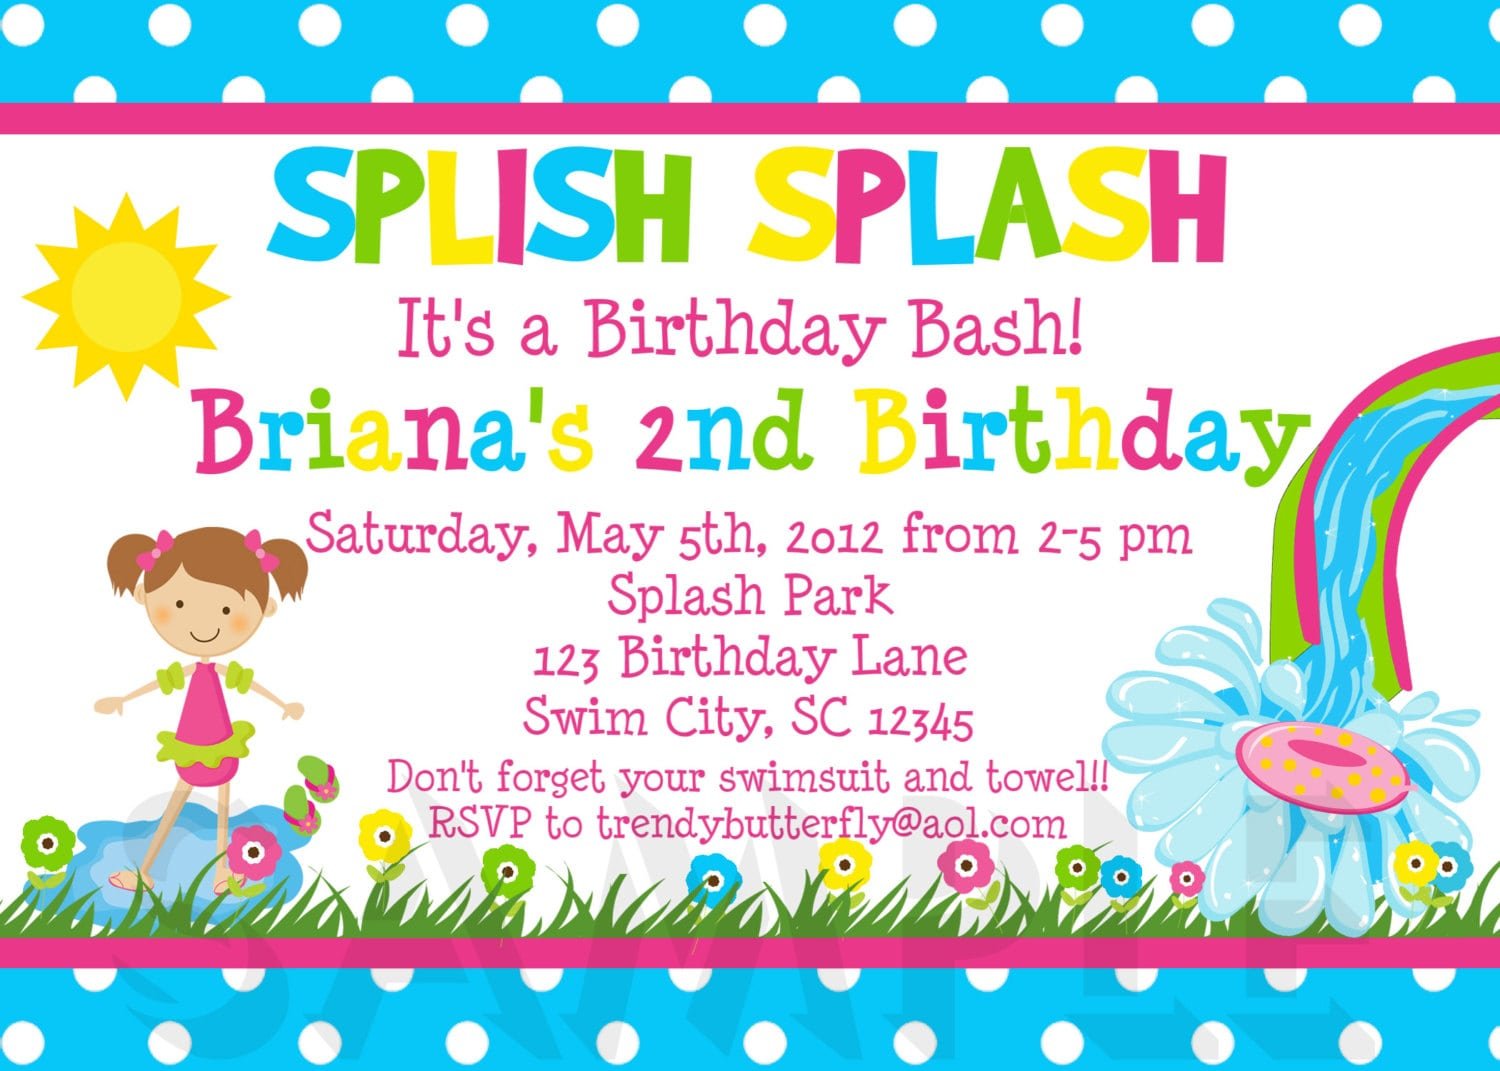 Children's Birthday Party Invitation Pictures About Children's